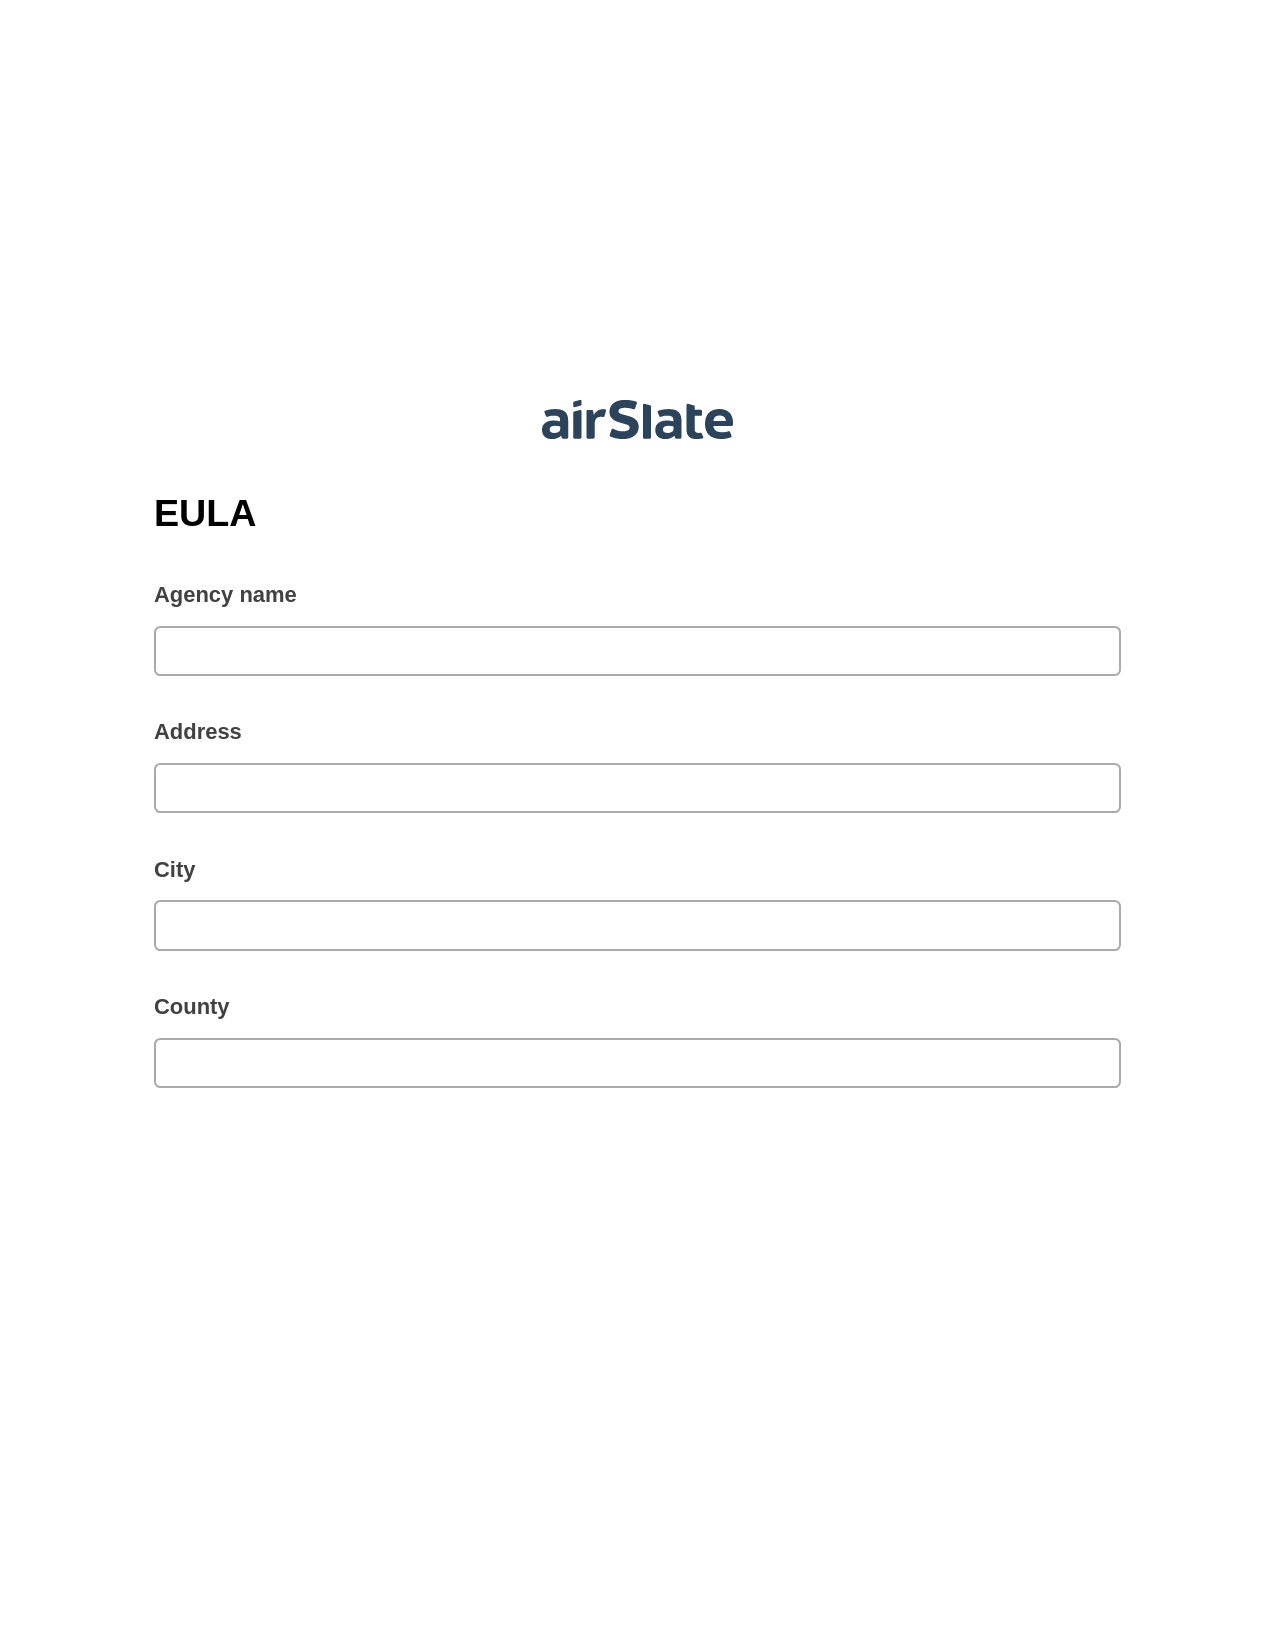 EULA Pre-fill Slate from MS Dynamics 365 Records Bot, Reminder Bot, Webhook Postfinish Bot